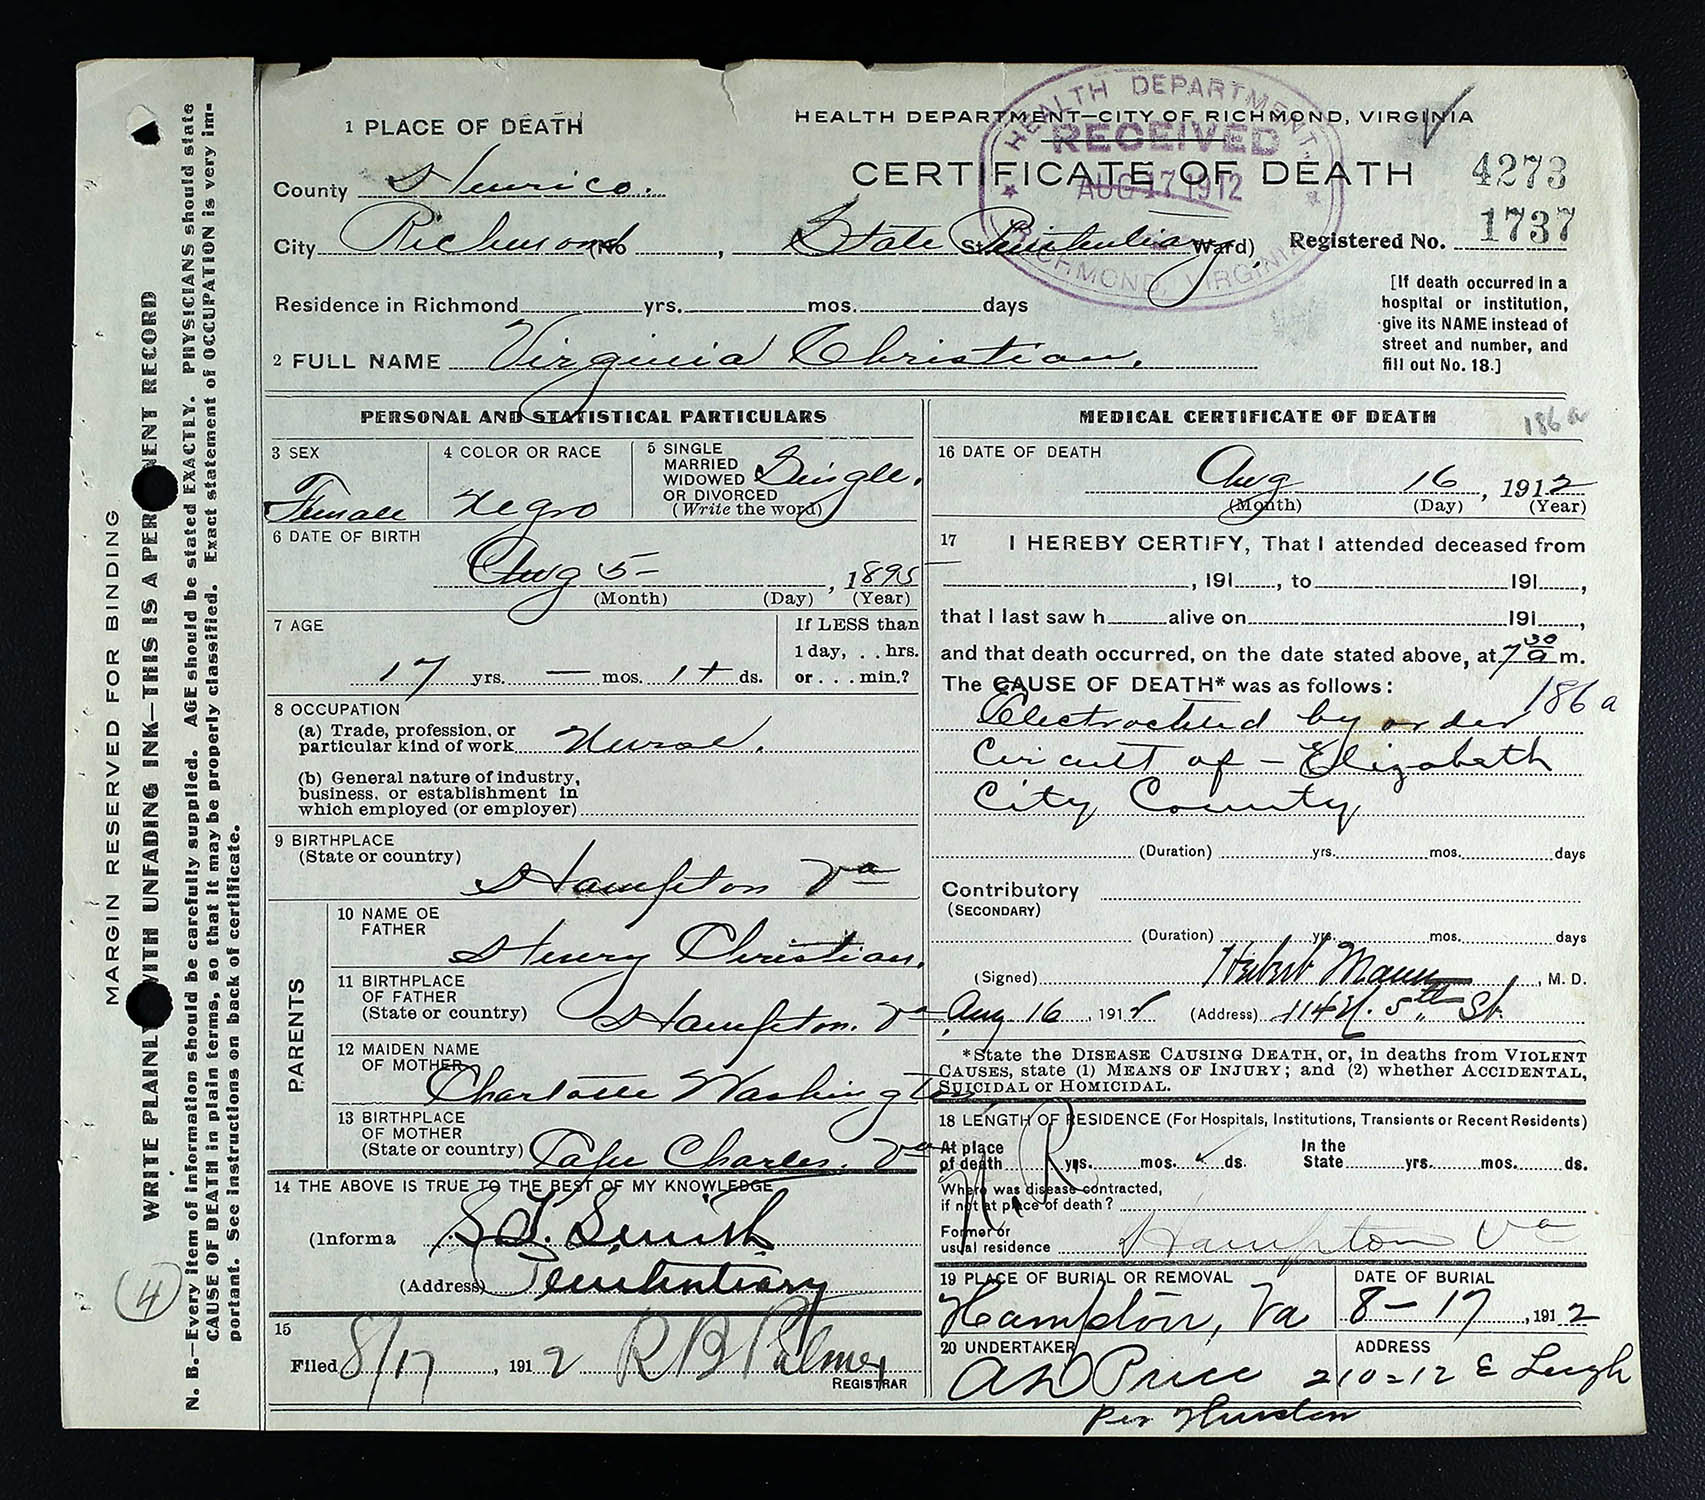 Death Certificate of Virginia Christian (died August 16, 1912) · Online ...